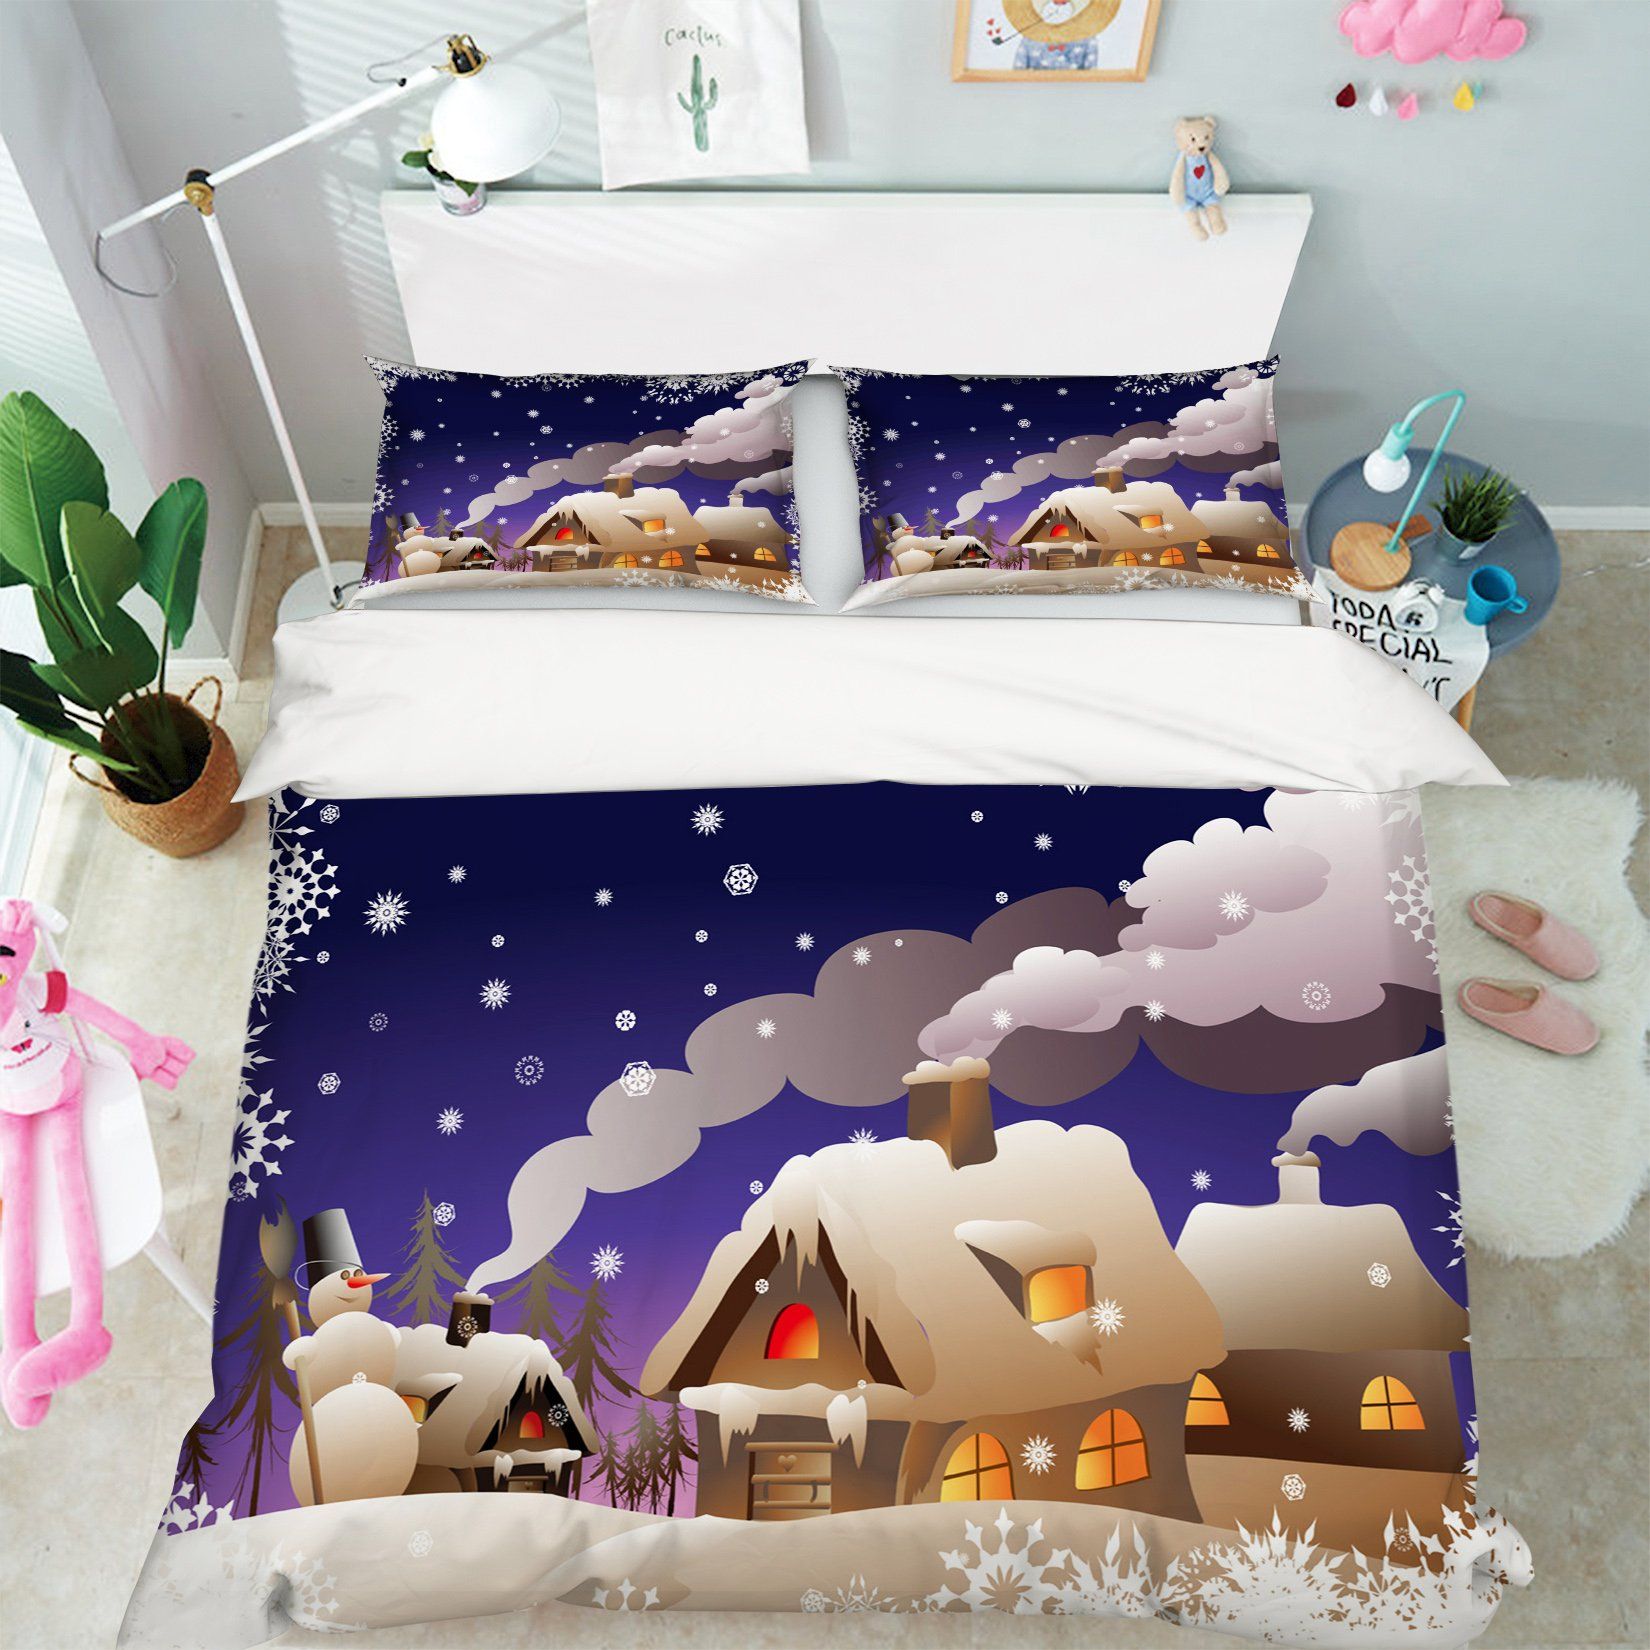 3D Snowman Smoke 35 Bed Pillowcases Quilt Quiet Covers AJ Creativity Home 